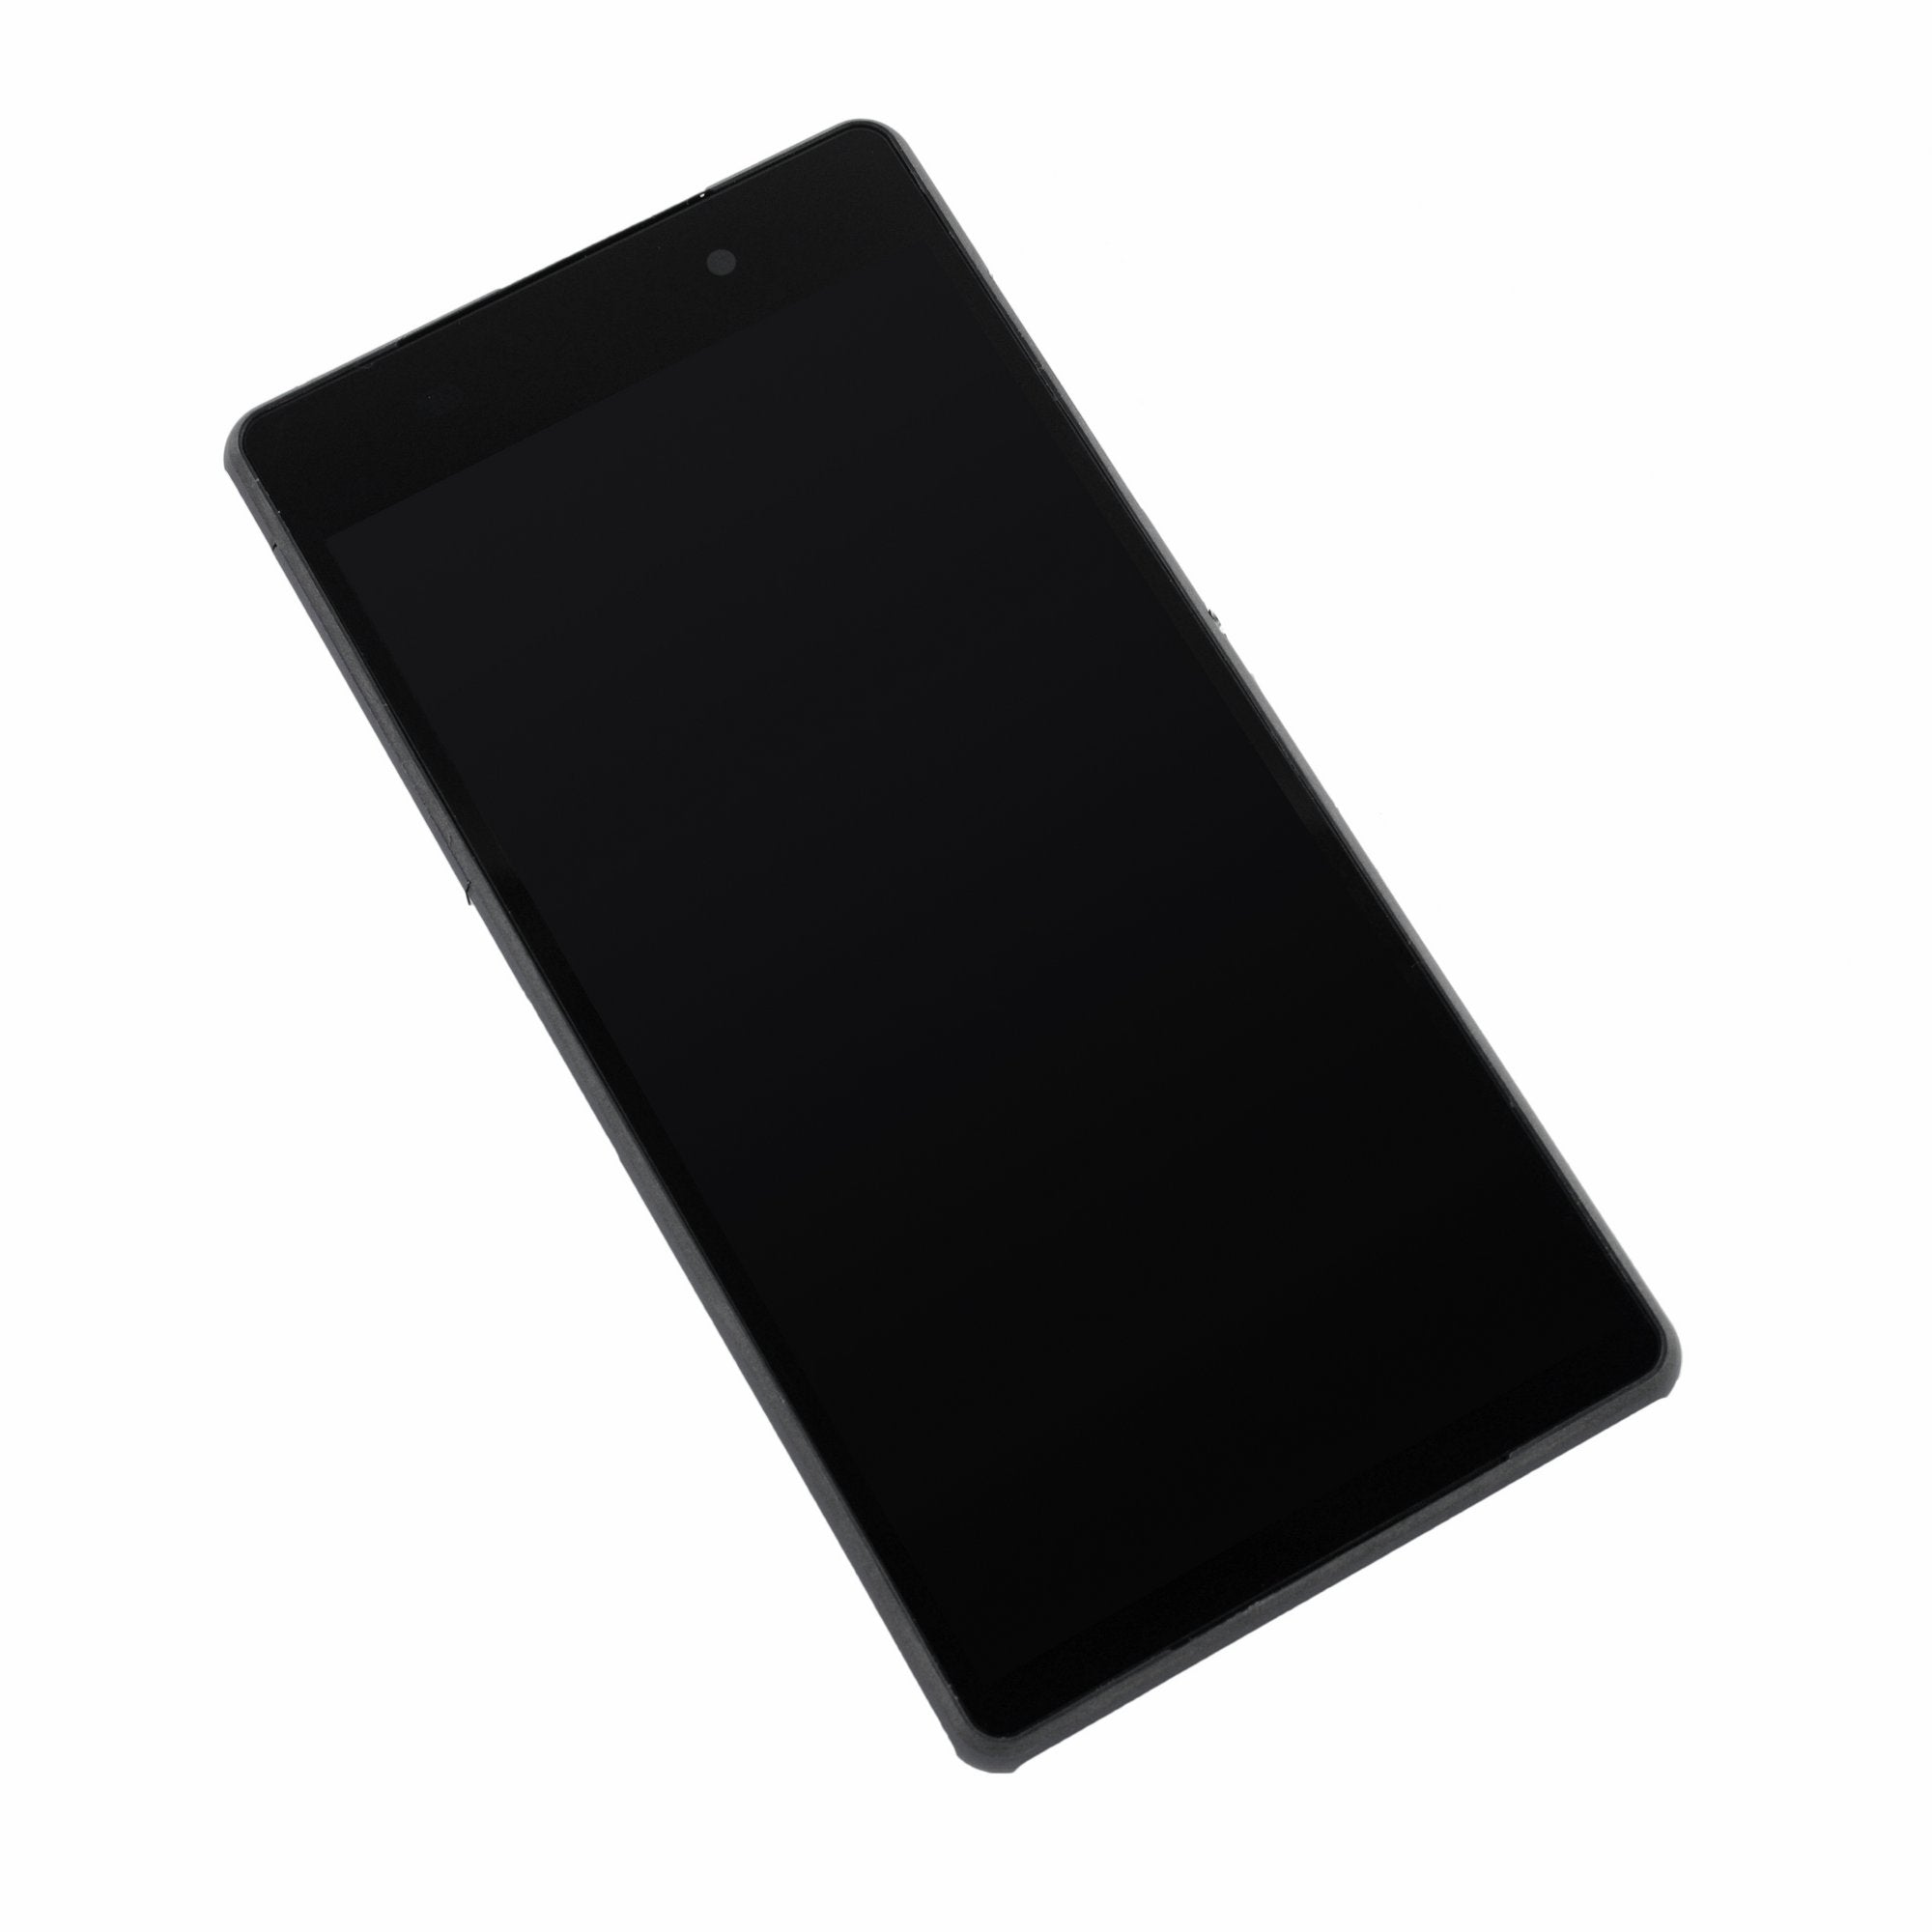 Sony Xperia Z2 Screen Assembly Black New